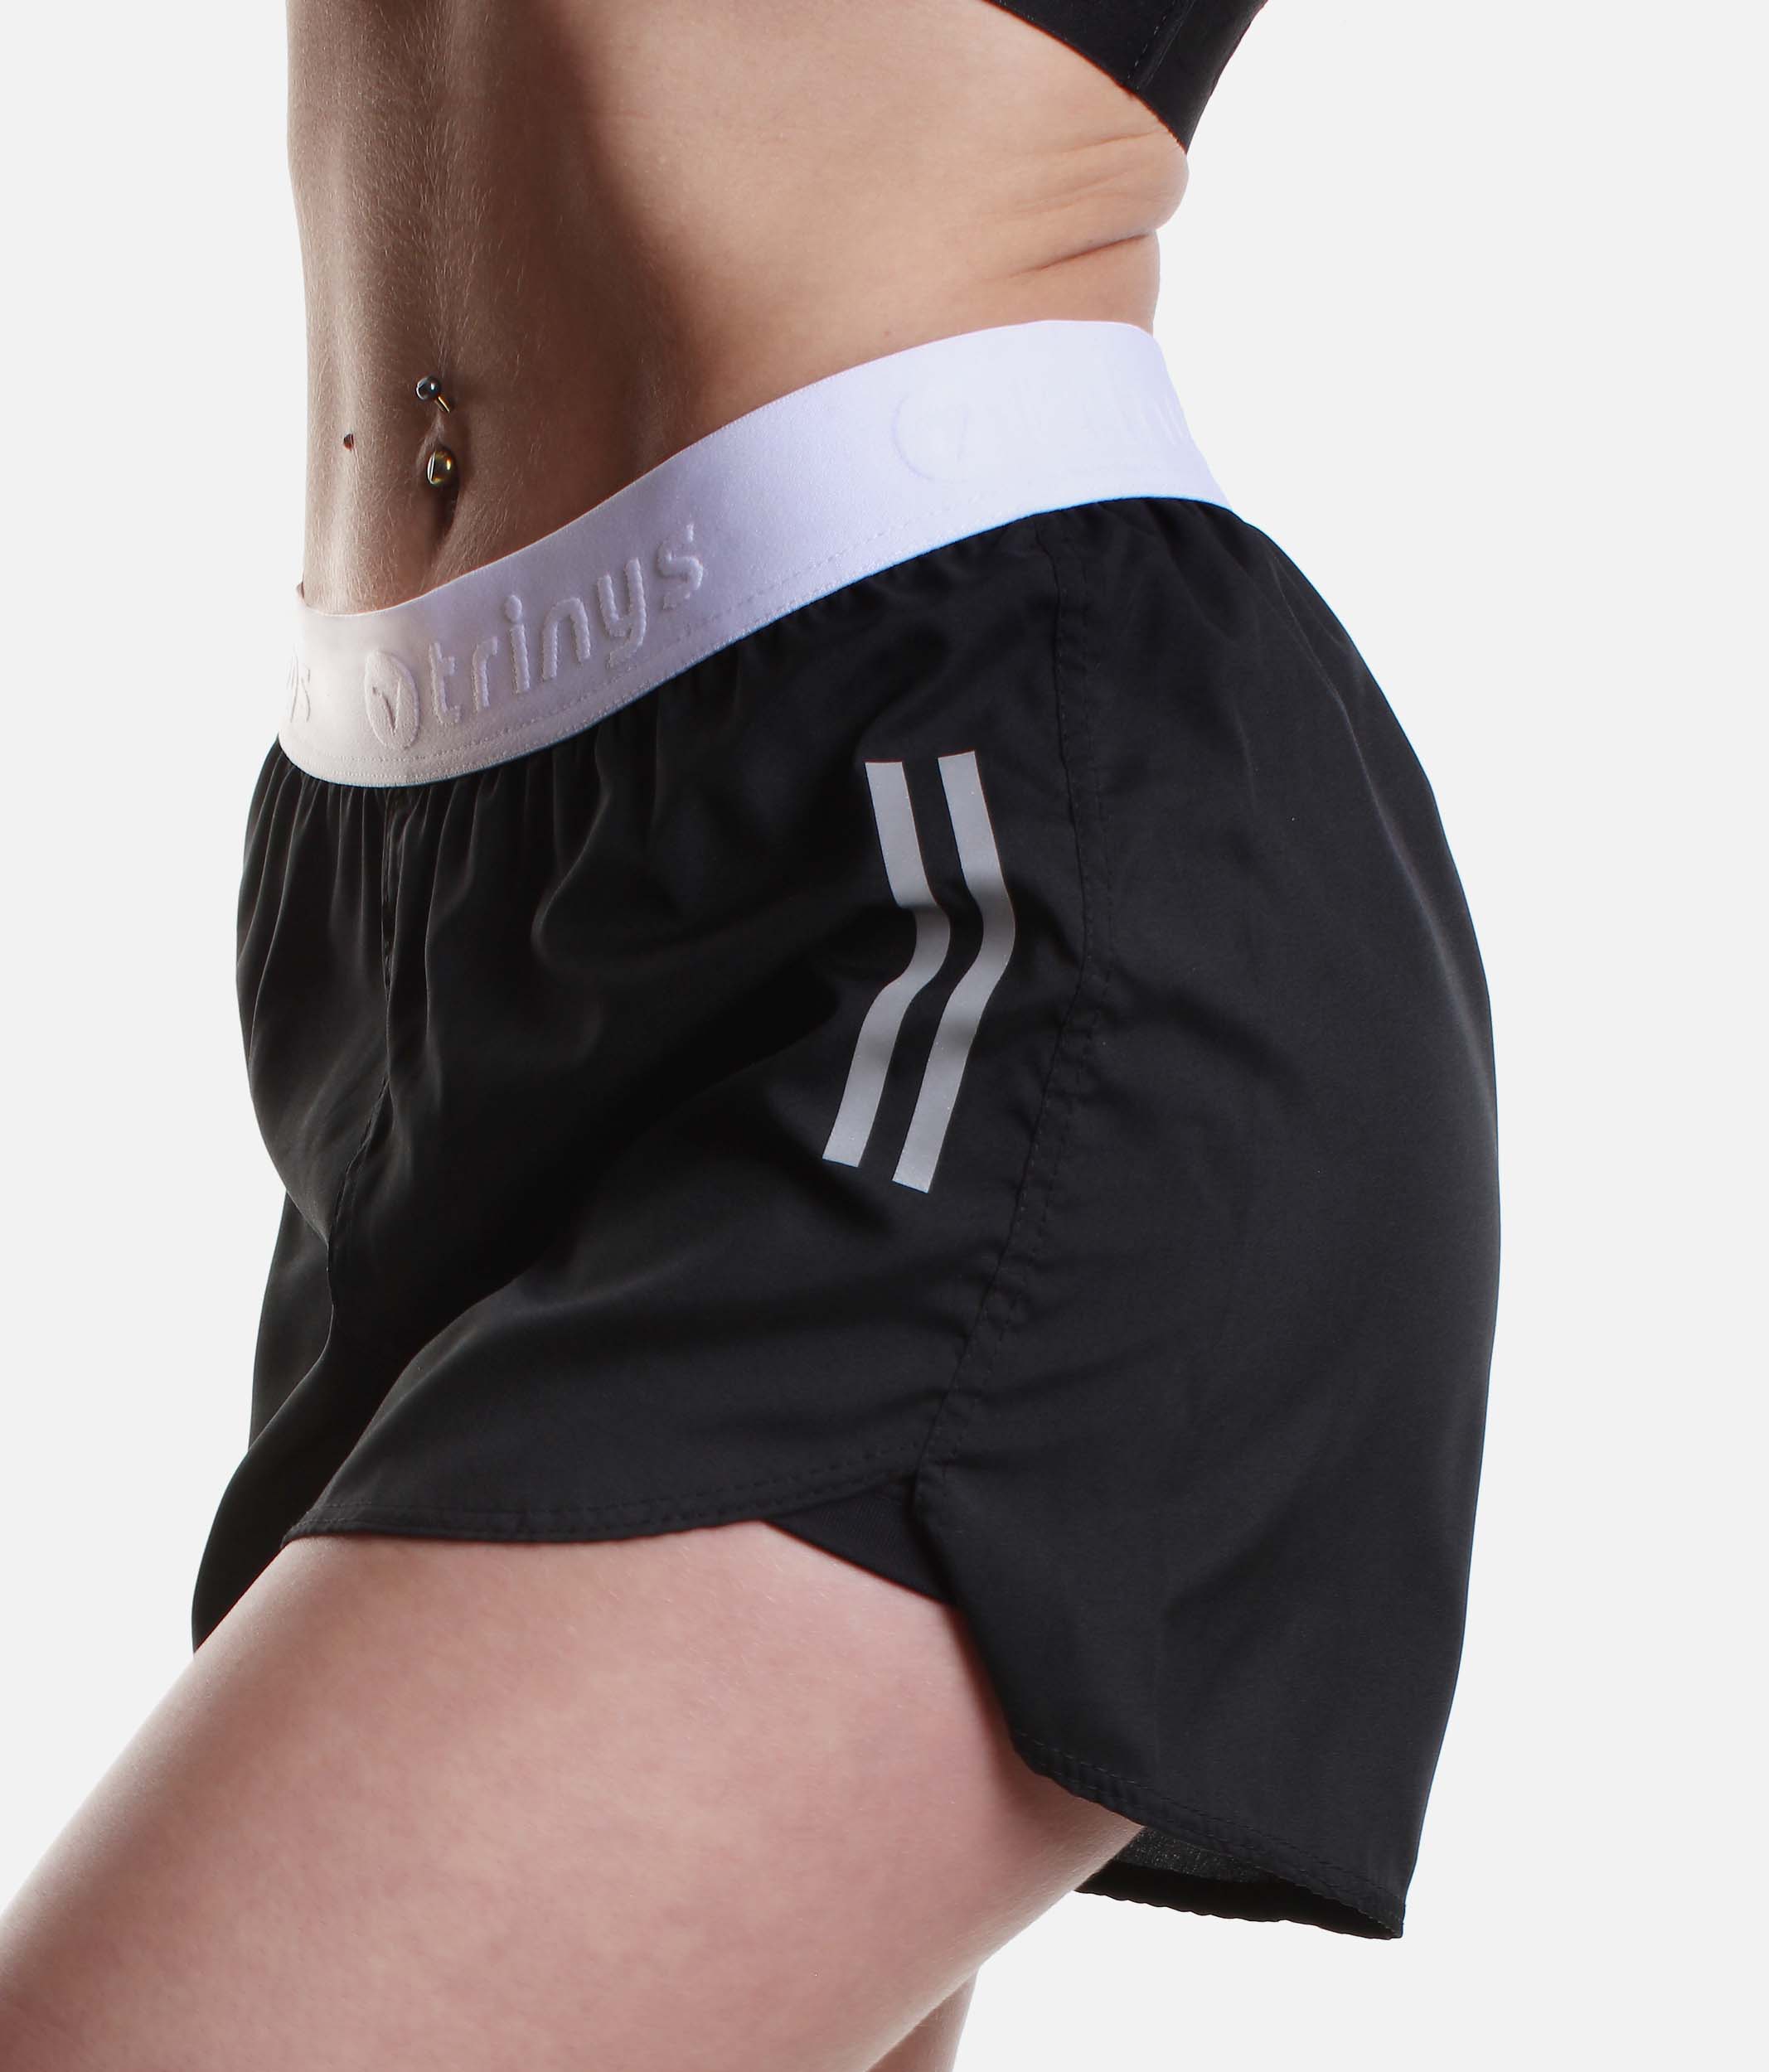 Pantalones cortos de doble capa - F 15193